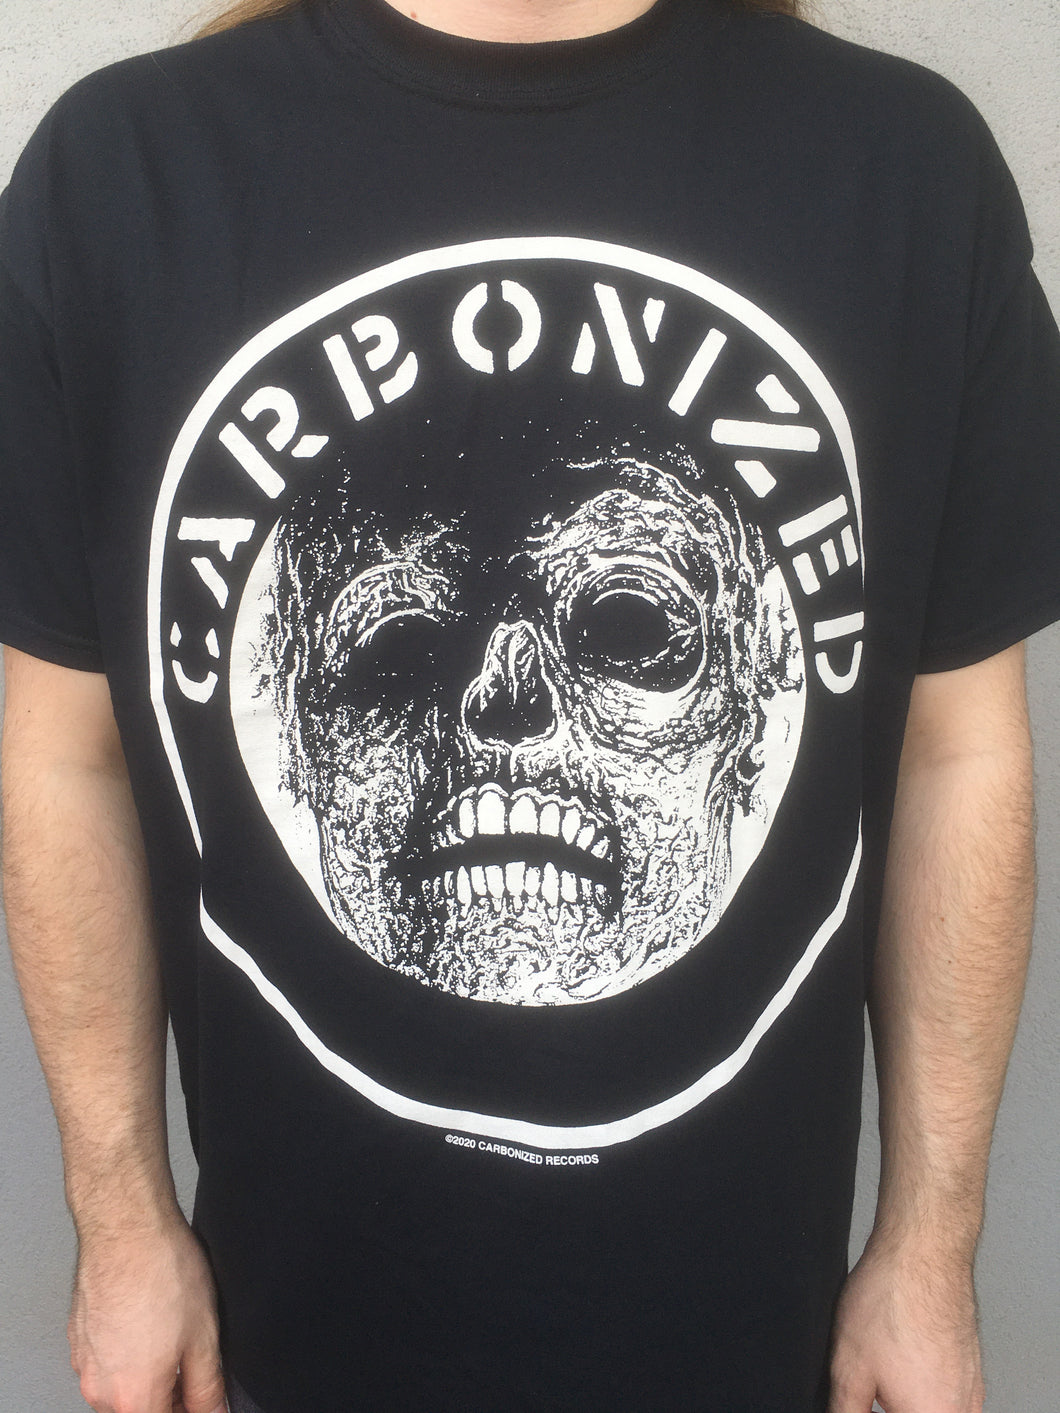 Carbonized Records Short Sleeve T-Shirt